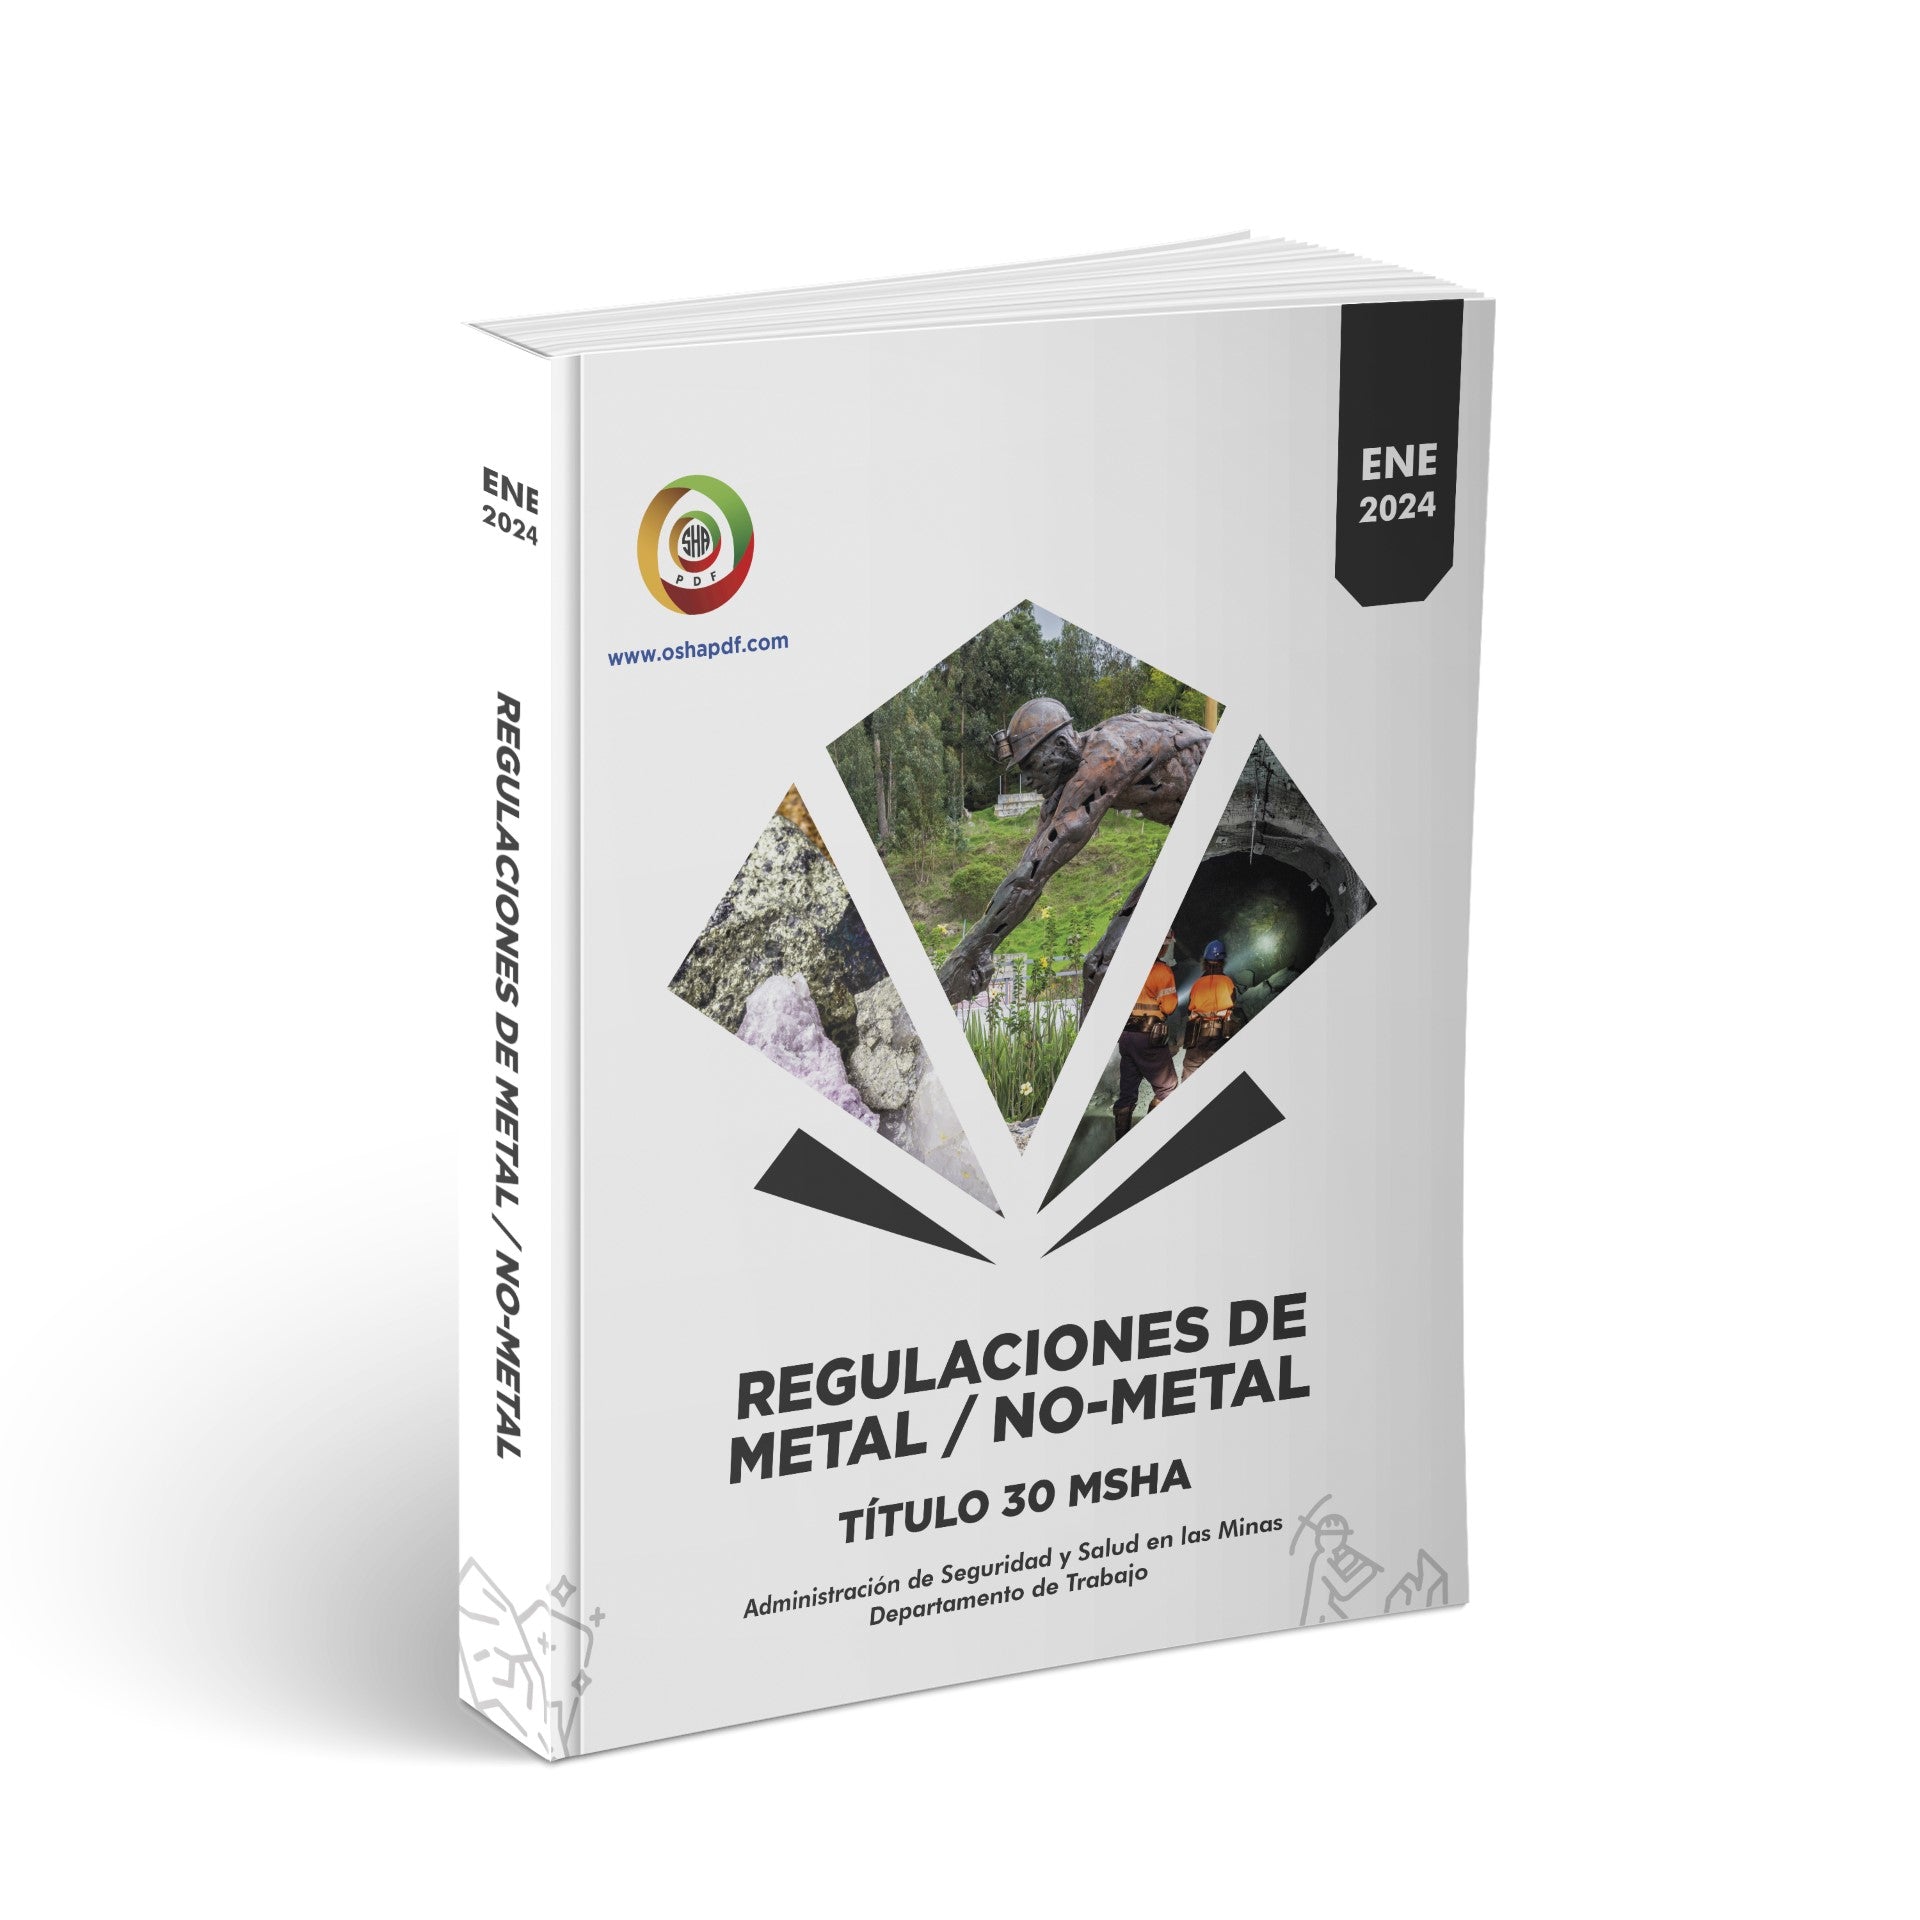 Spanish Metal/Non-Metal Regulations for Mining Title 30 MSHA - January 2024